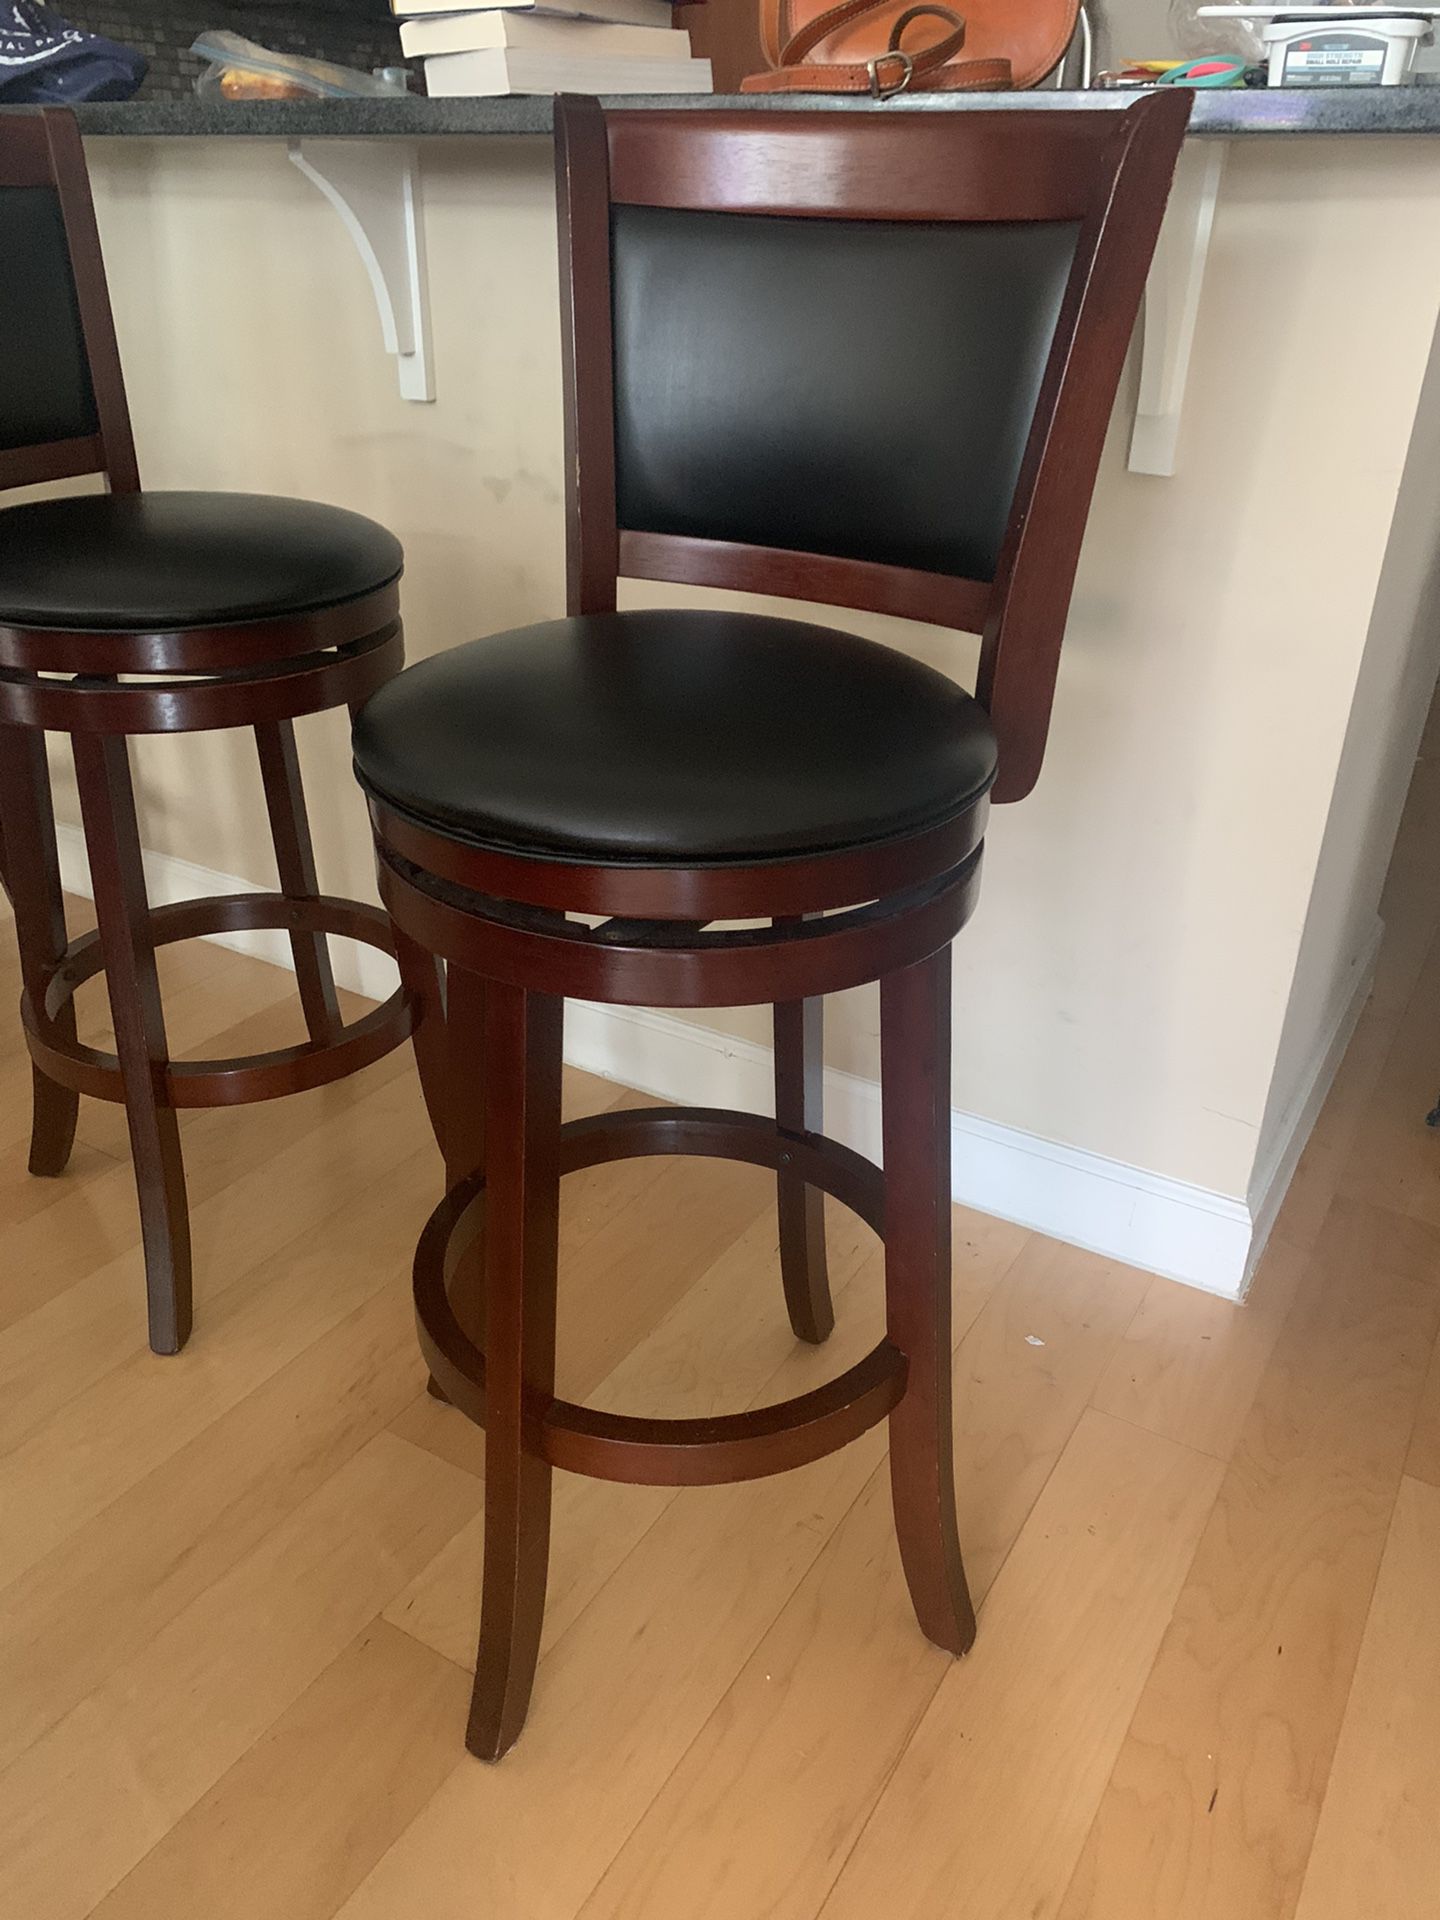 Black and brown bar stools - set of 3